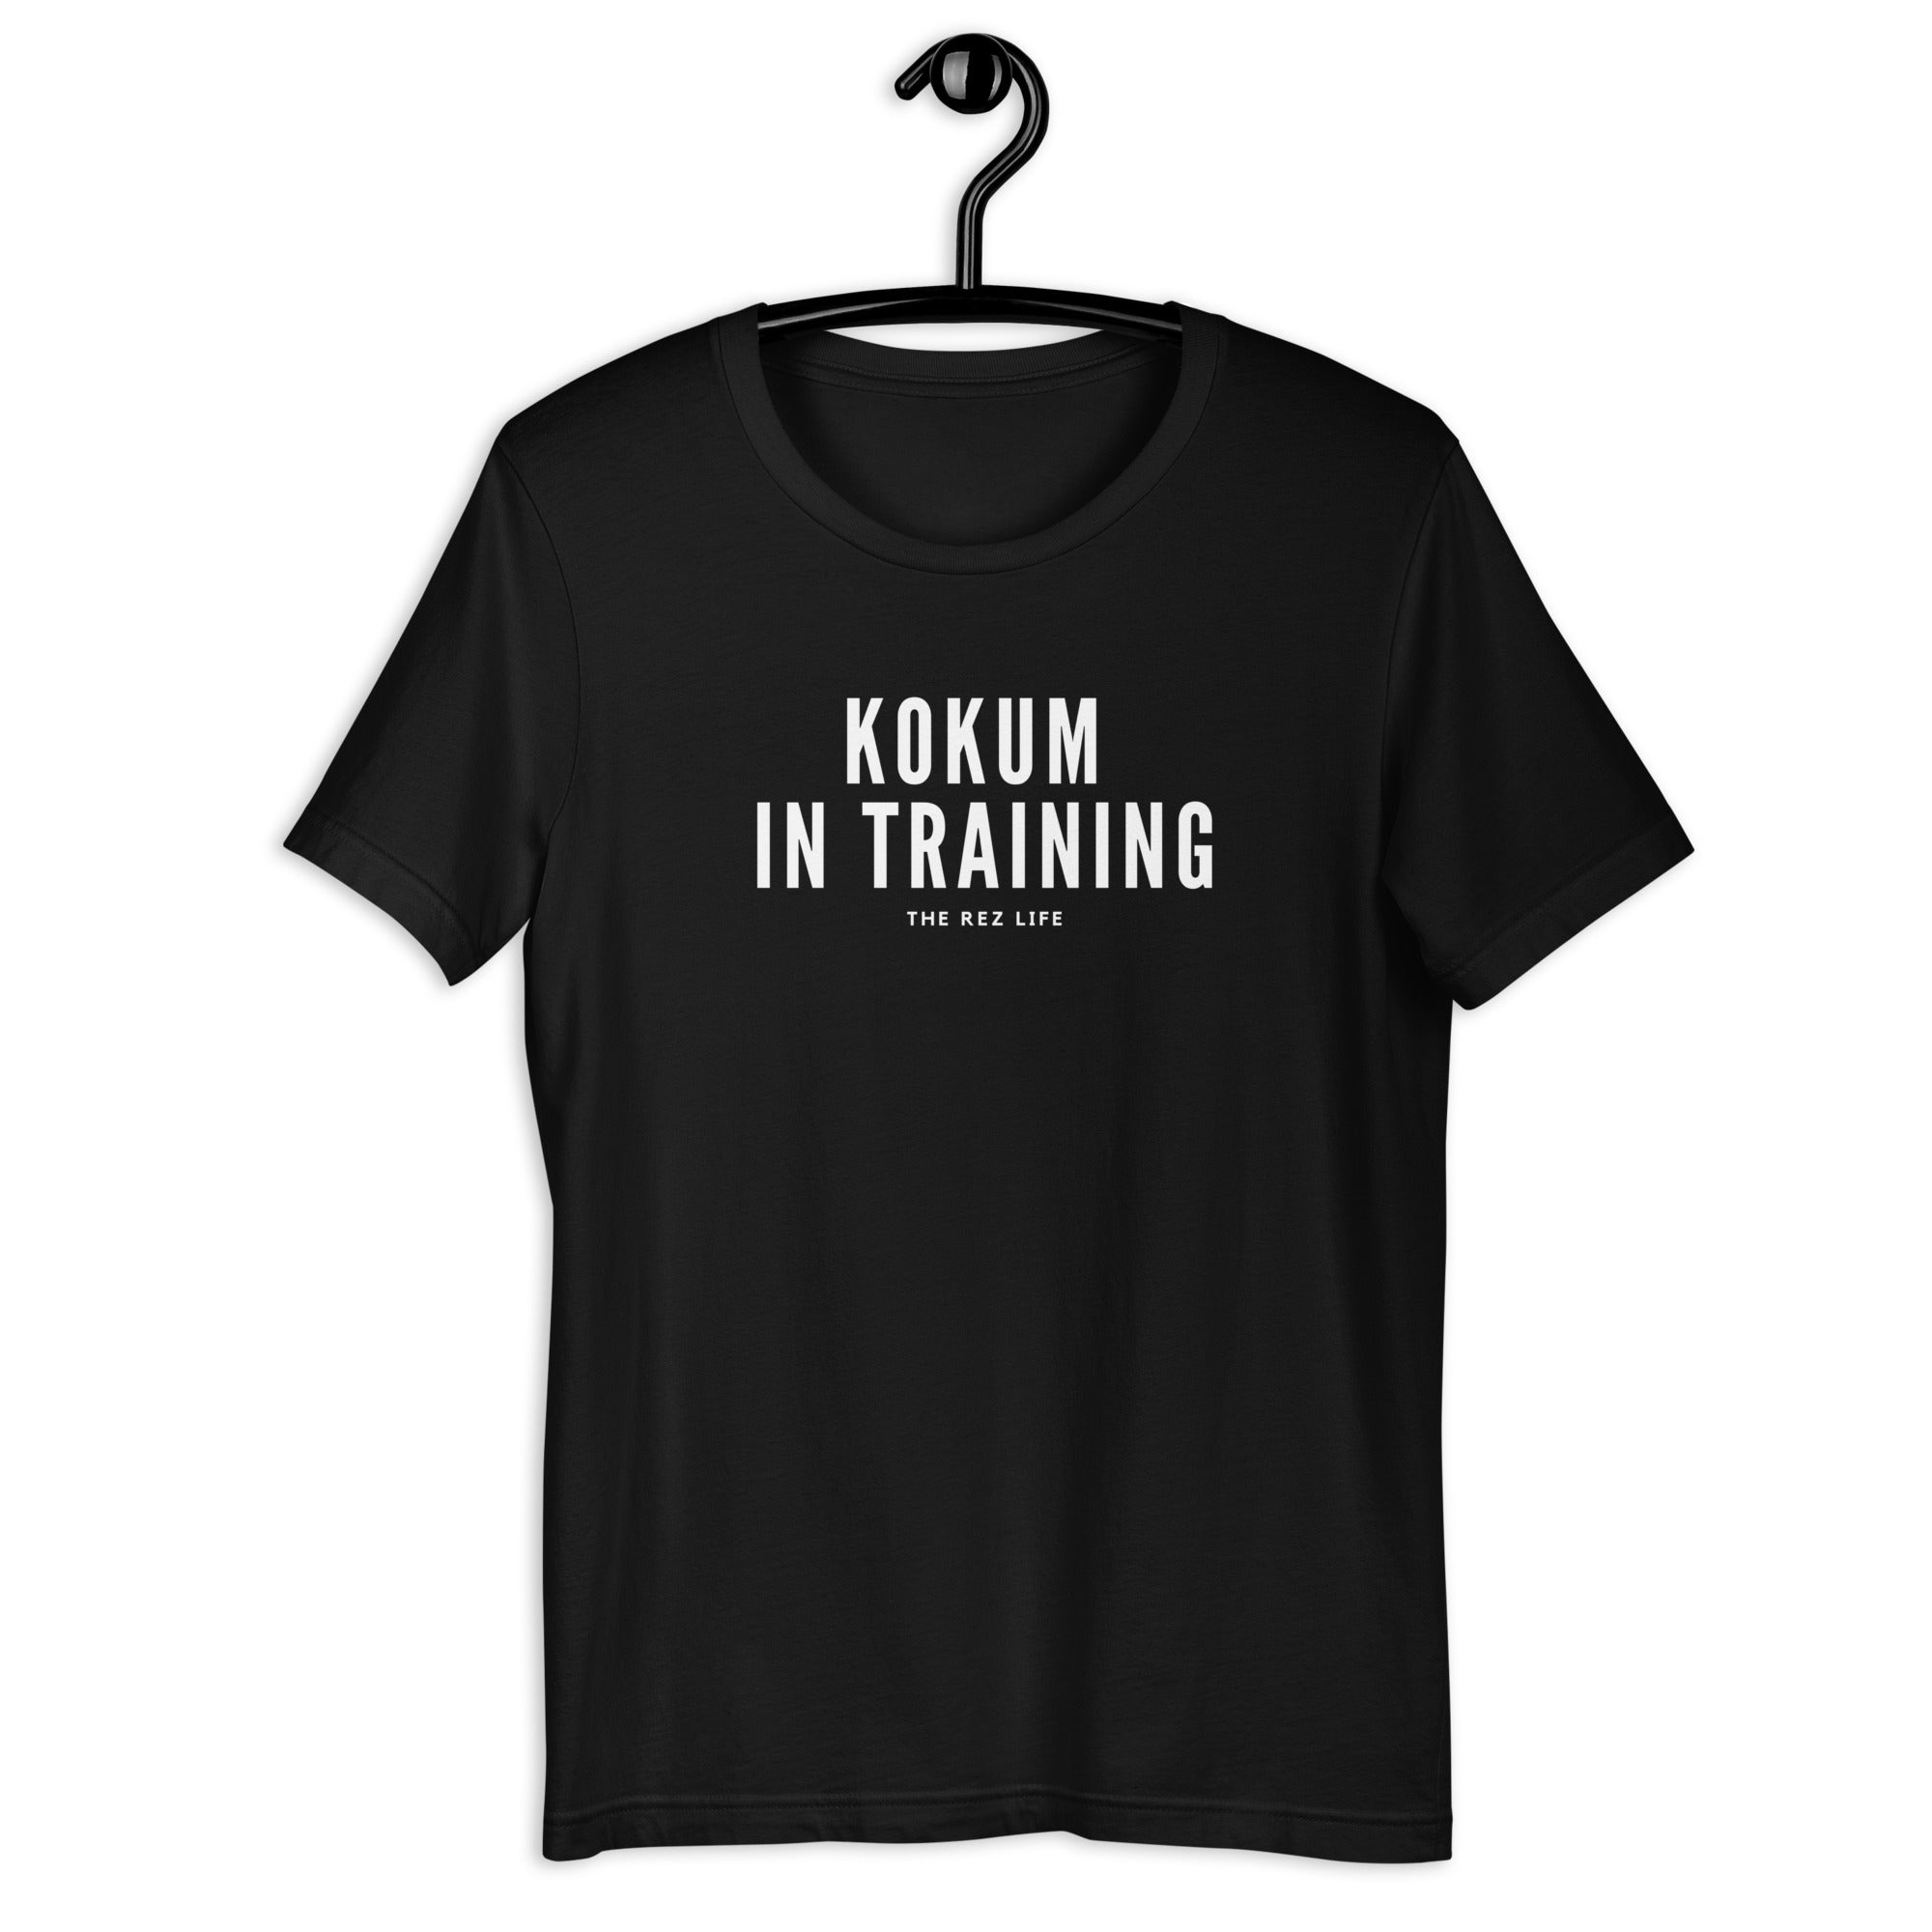 Kokum in training